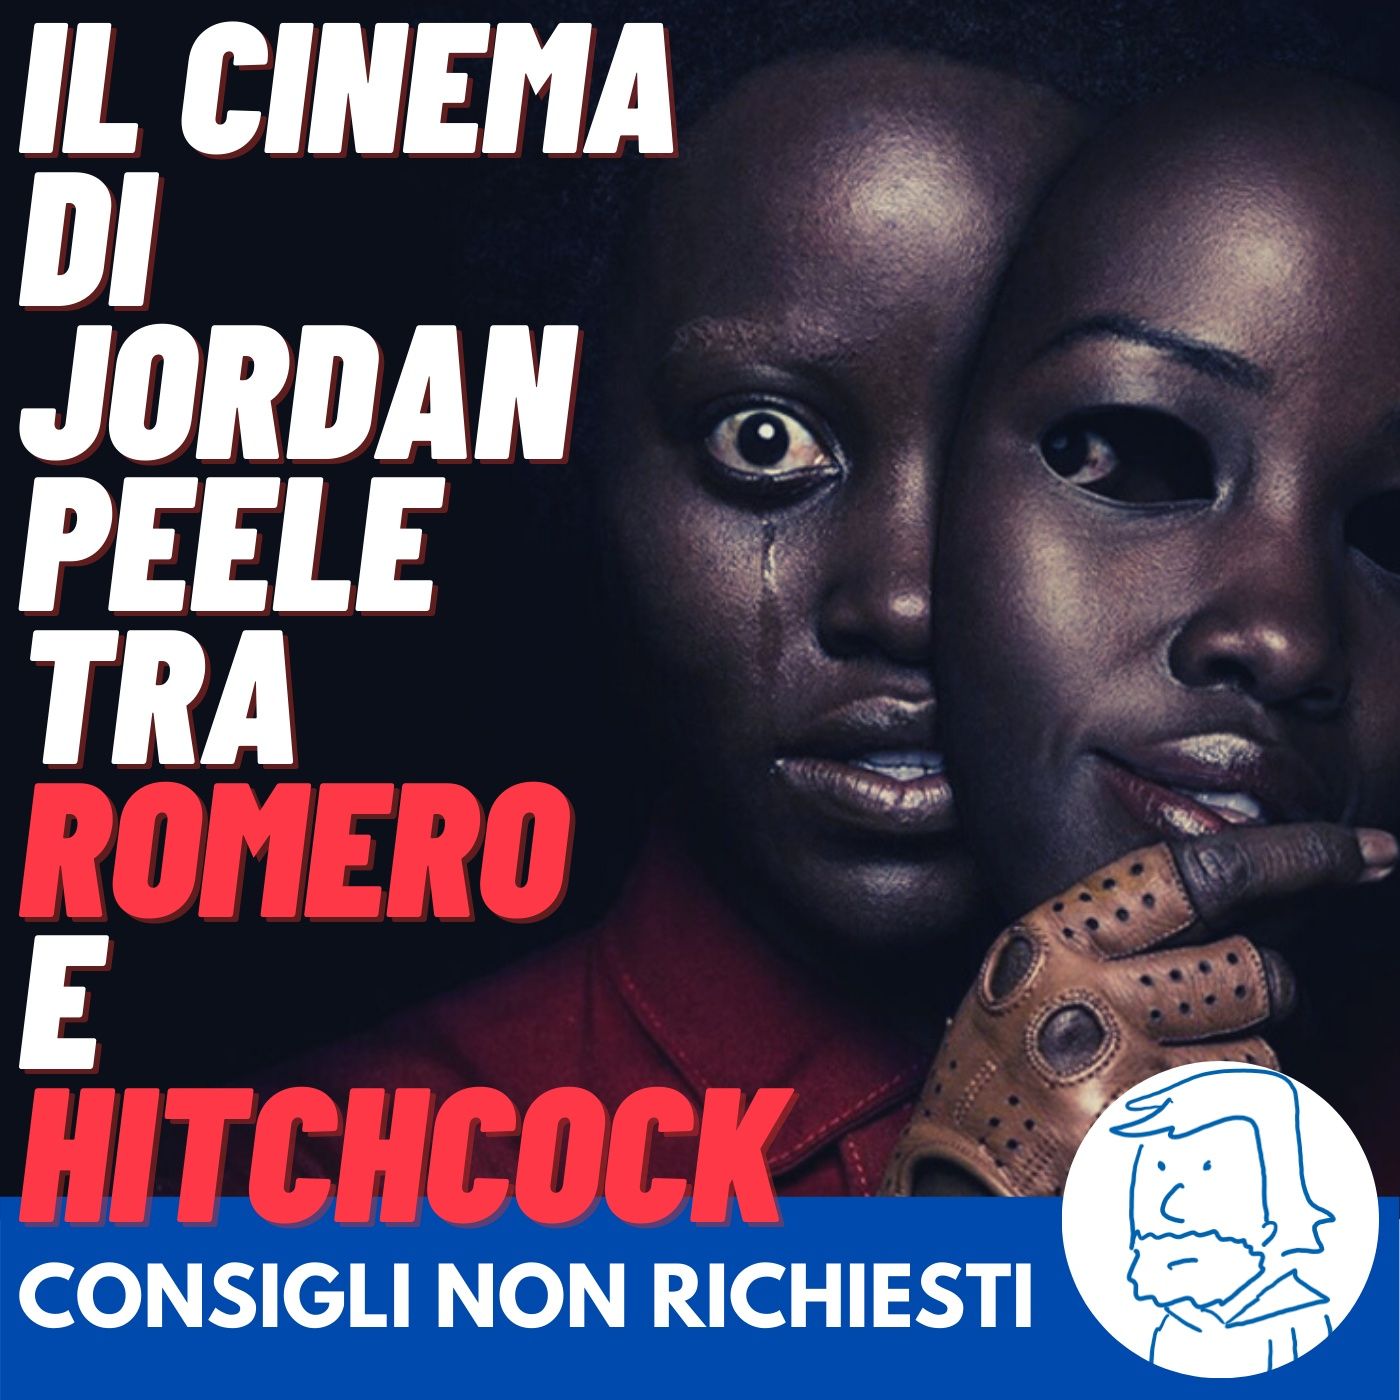 Il cinema di Jordan Peele tra Romero e Hitchcock!